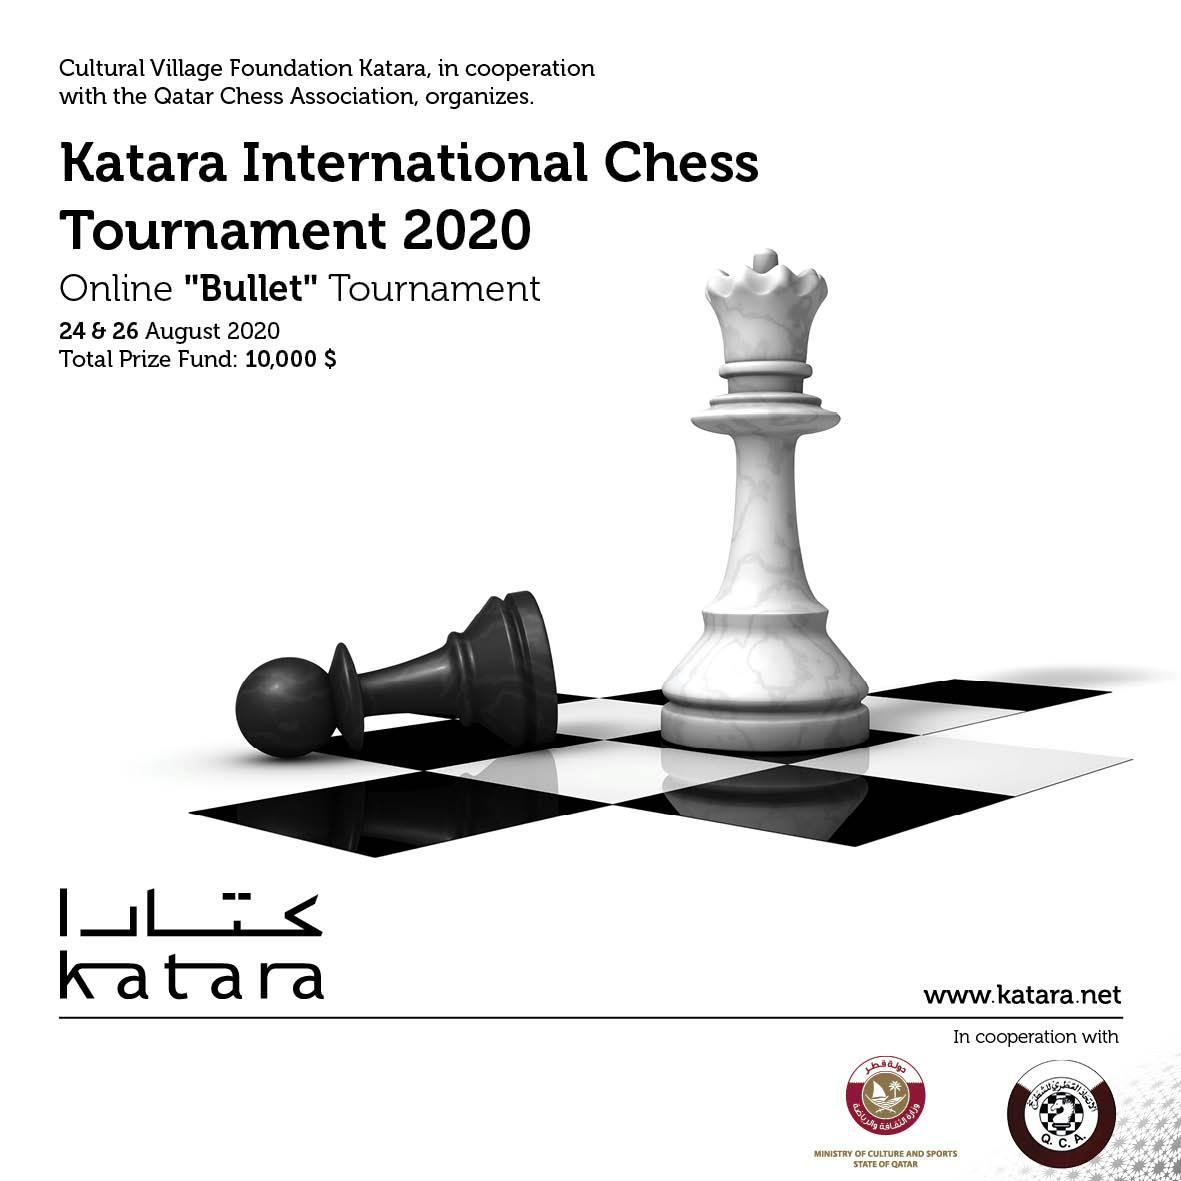 Announcing the Katara International Bullet Tournament with World